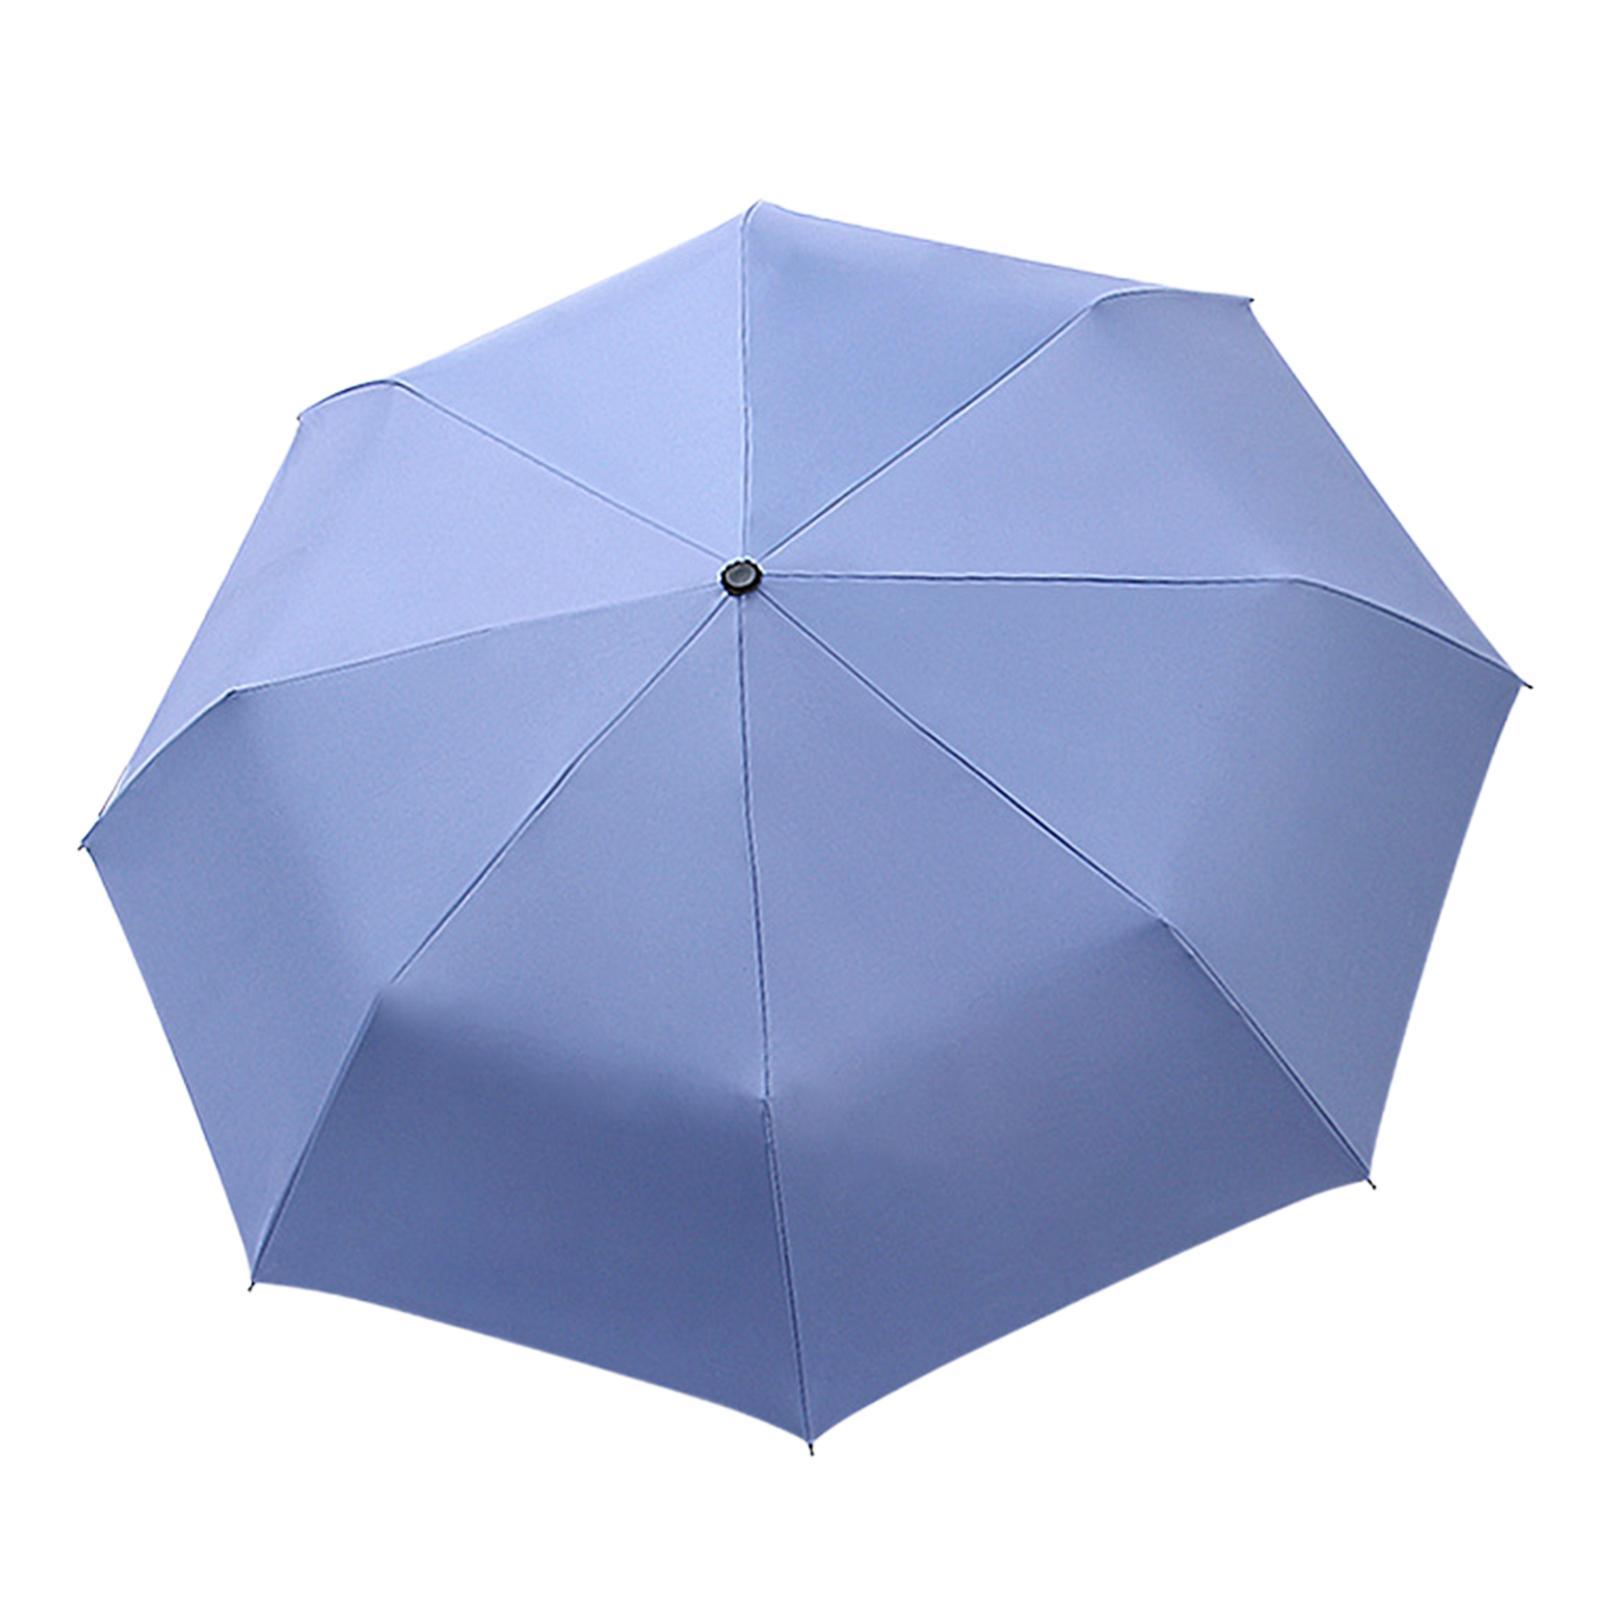 Compact Umbrella, Umbrellas for Rain Windproof, Sun Umbrella for Purse, Travel Umbrella for Men Women, Automatic Umbrella for Beach, Trips